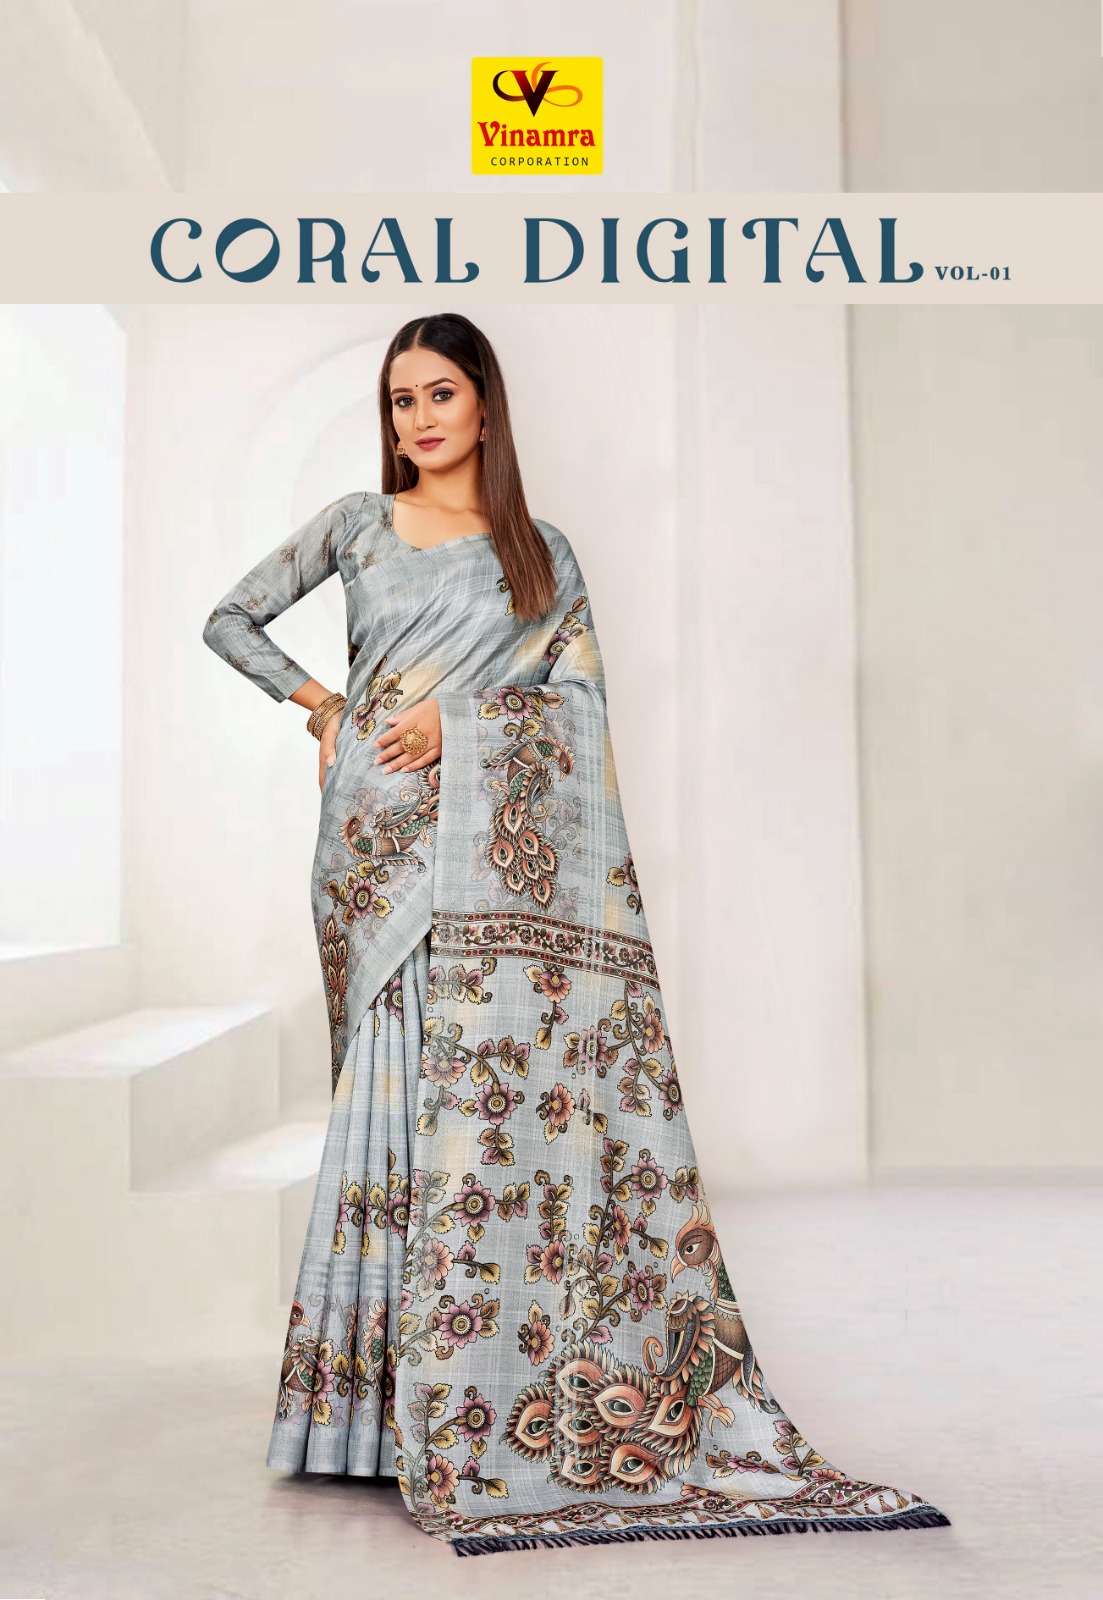 vinamra coral digital vol 1 amazing quality cotton digital print sarees collection 